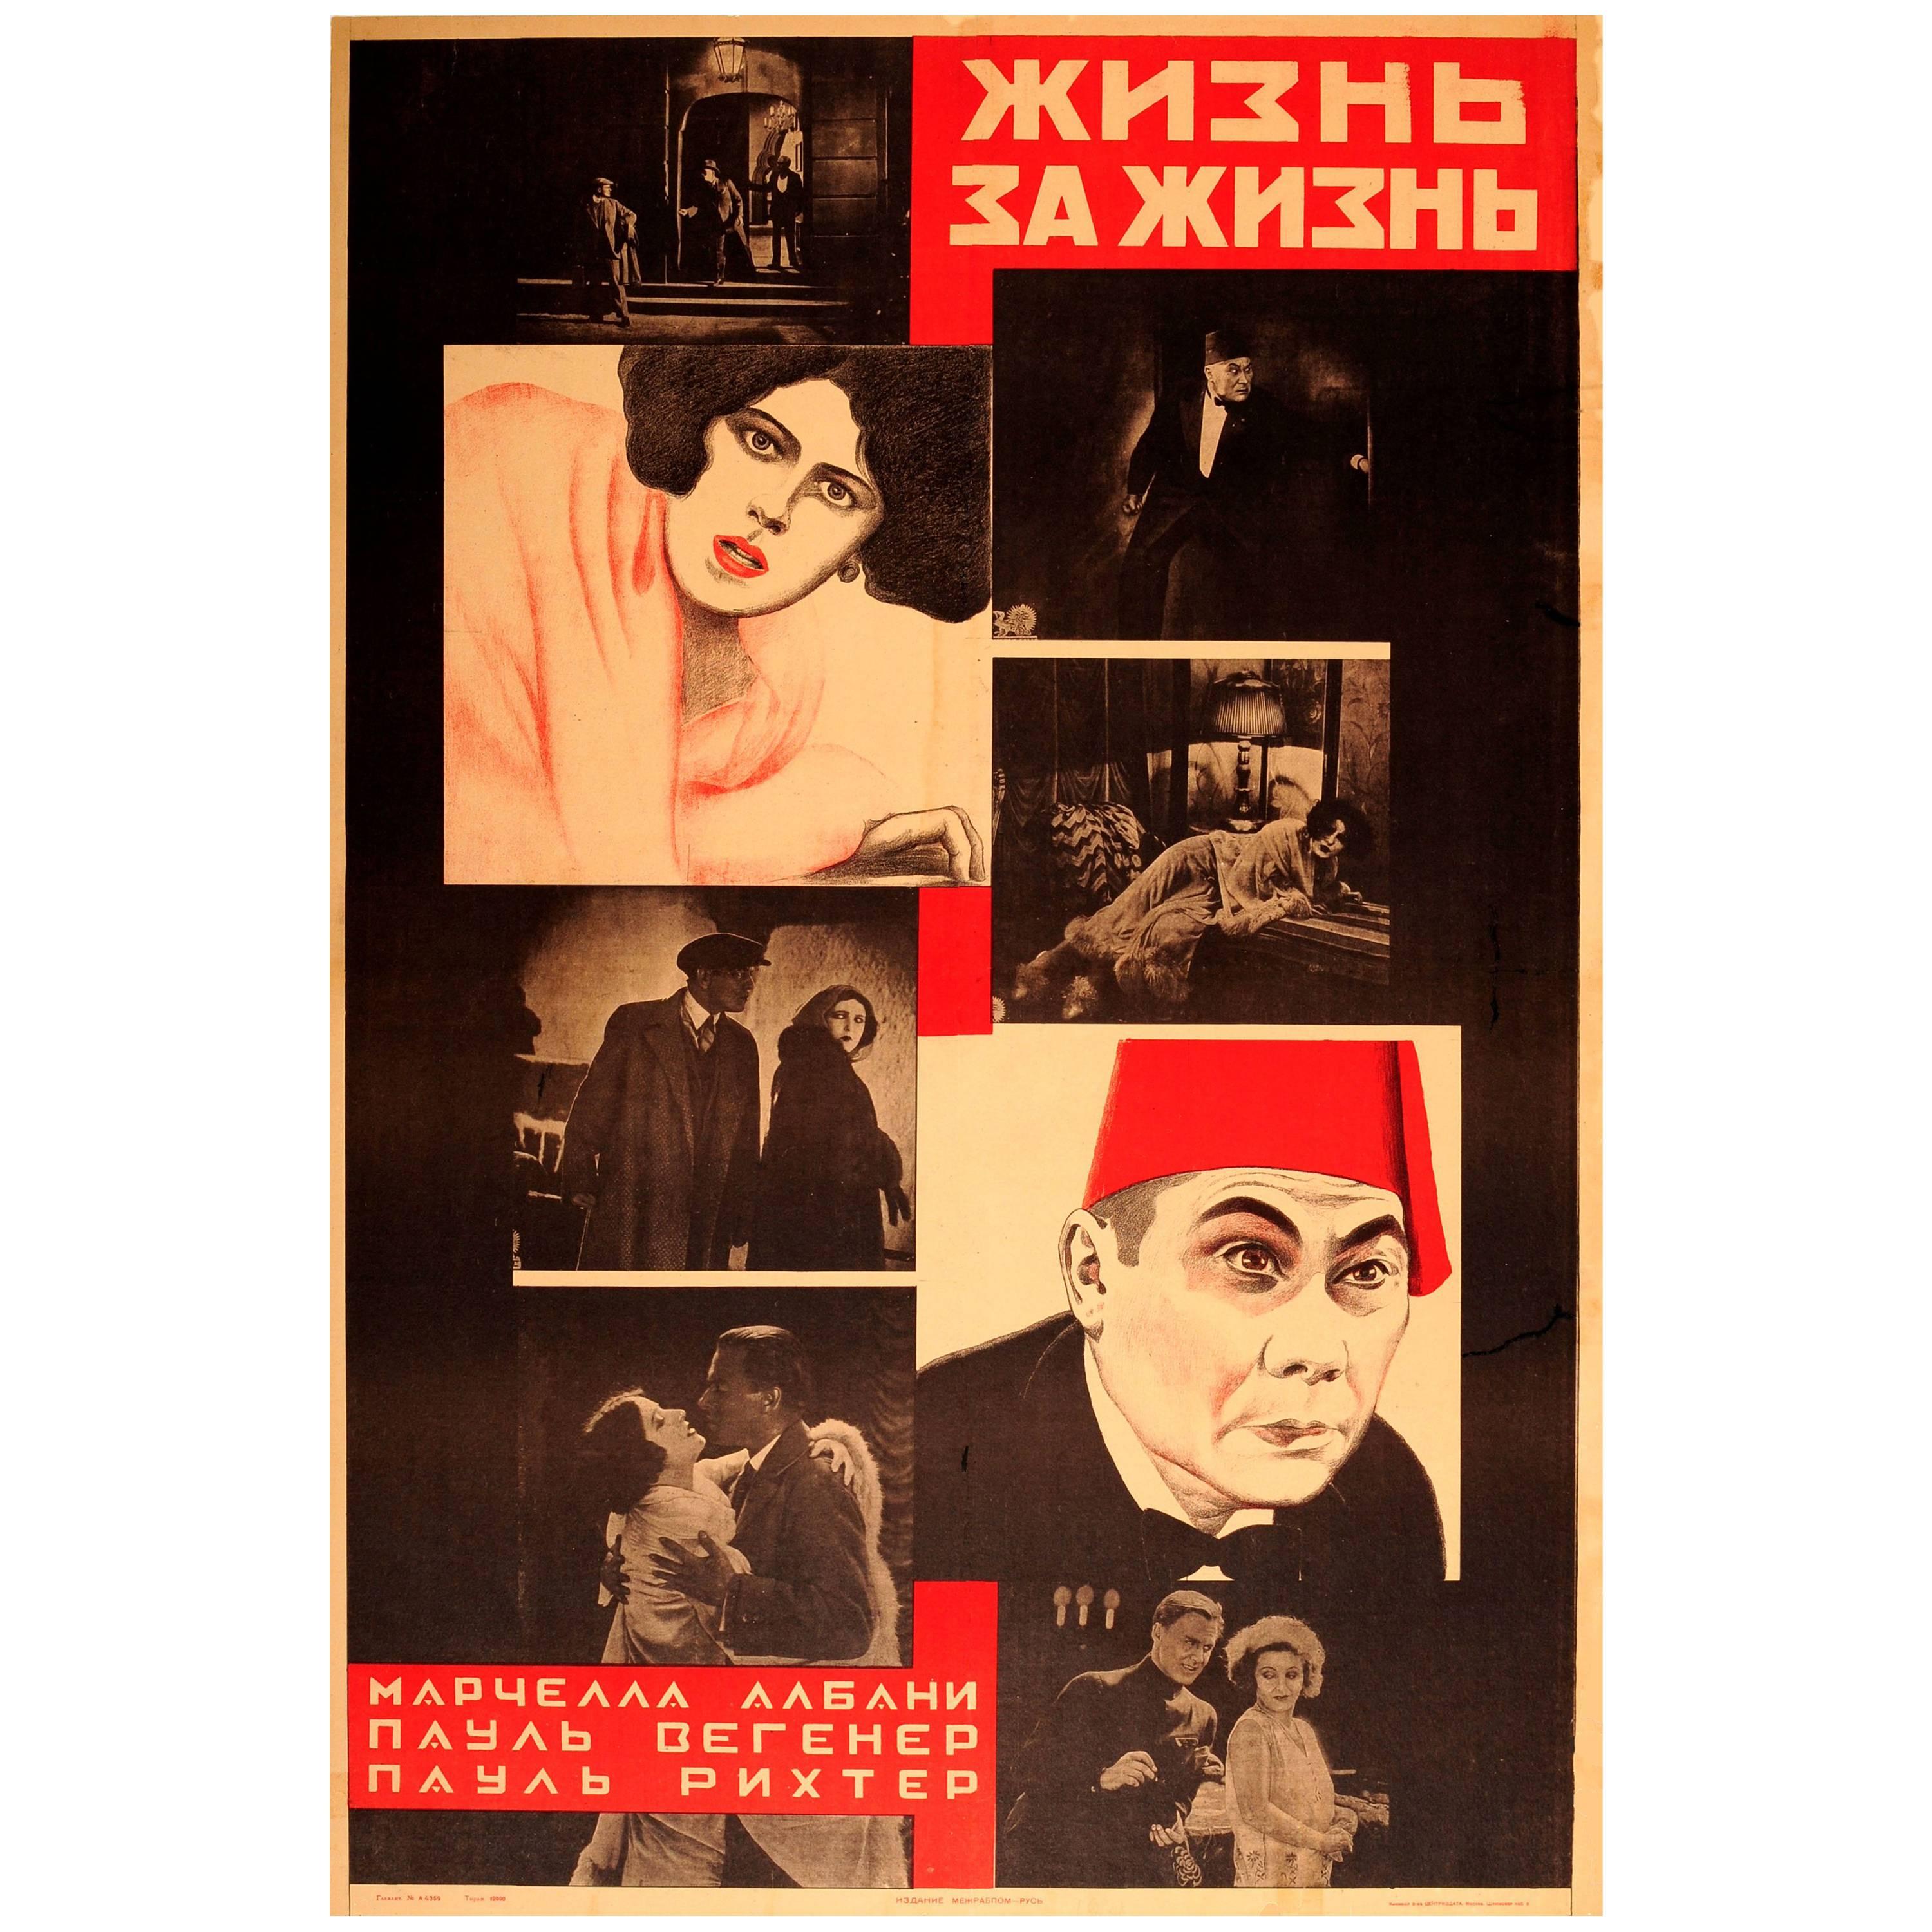 Original Soviet Constructivist Design Movie Poster for a Silent Film - Dagfin